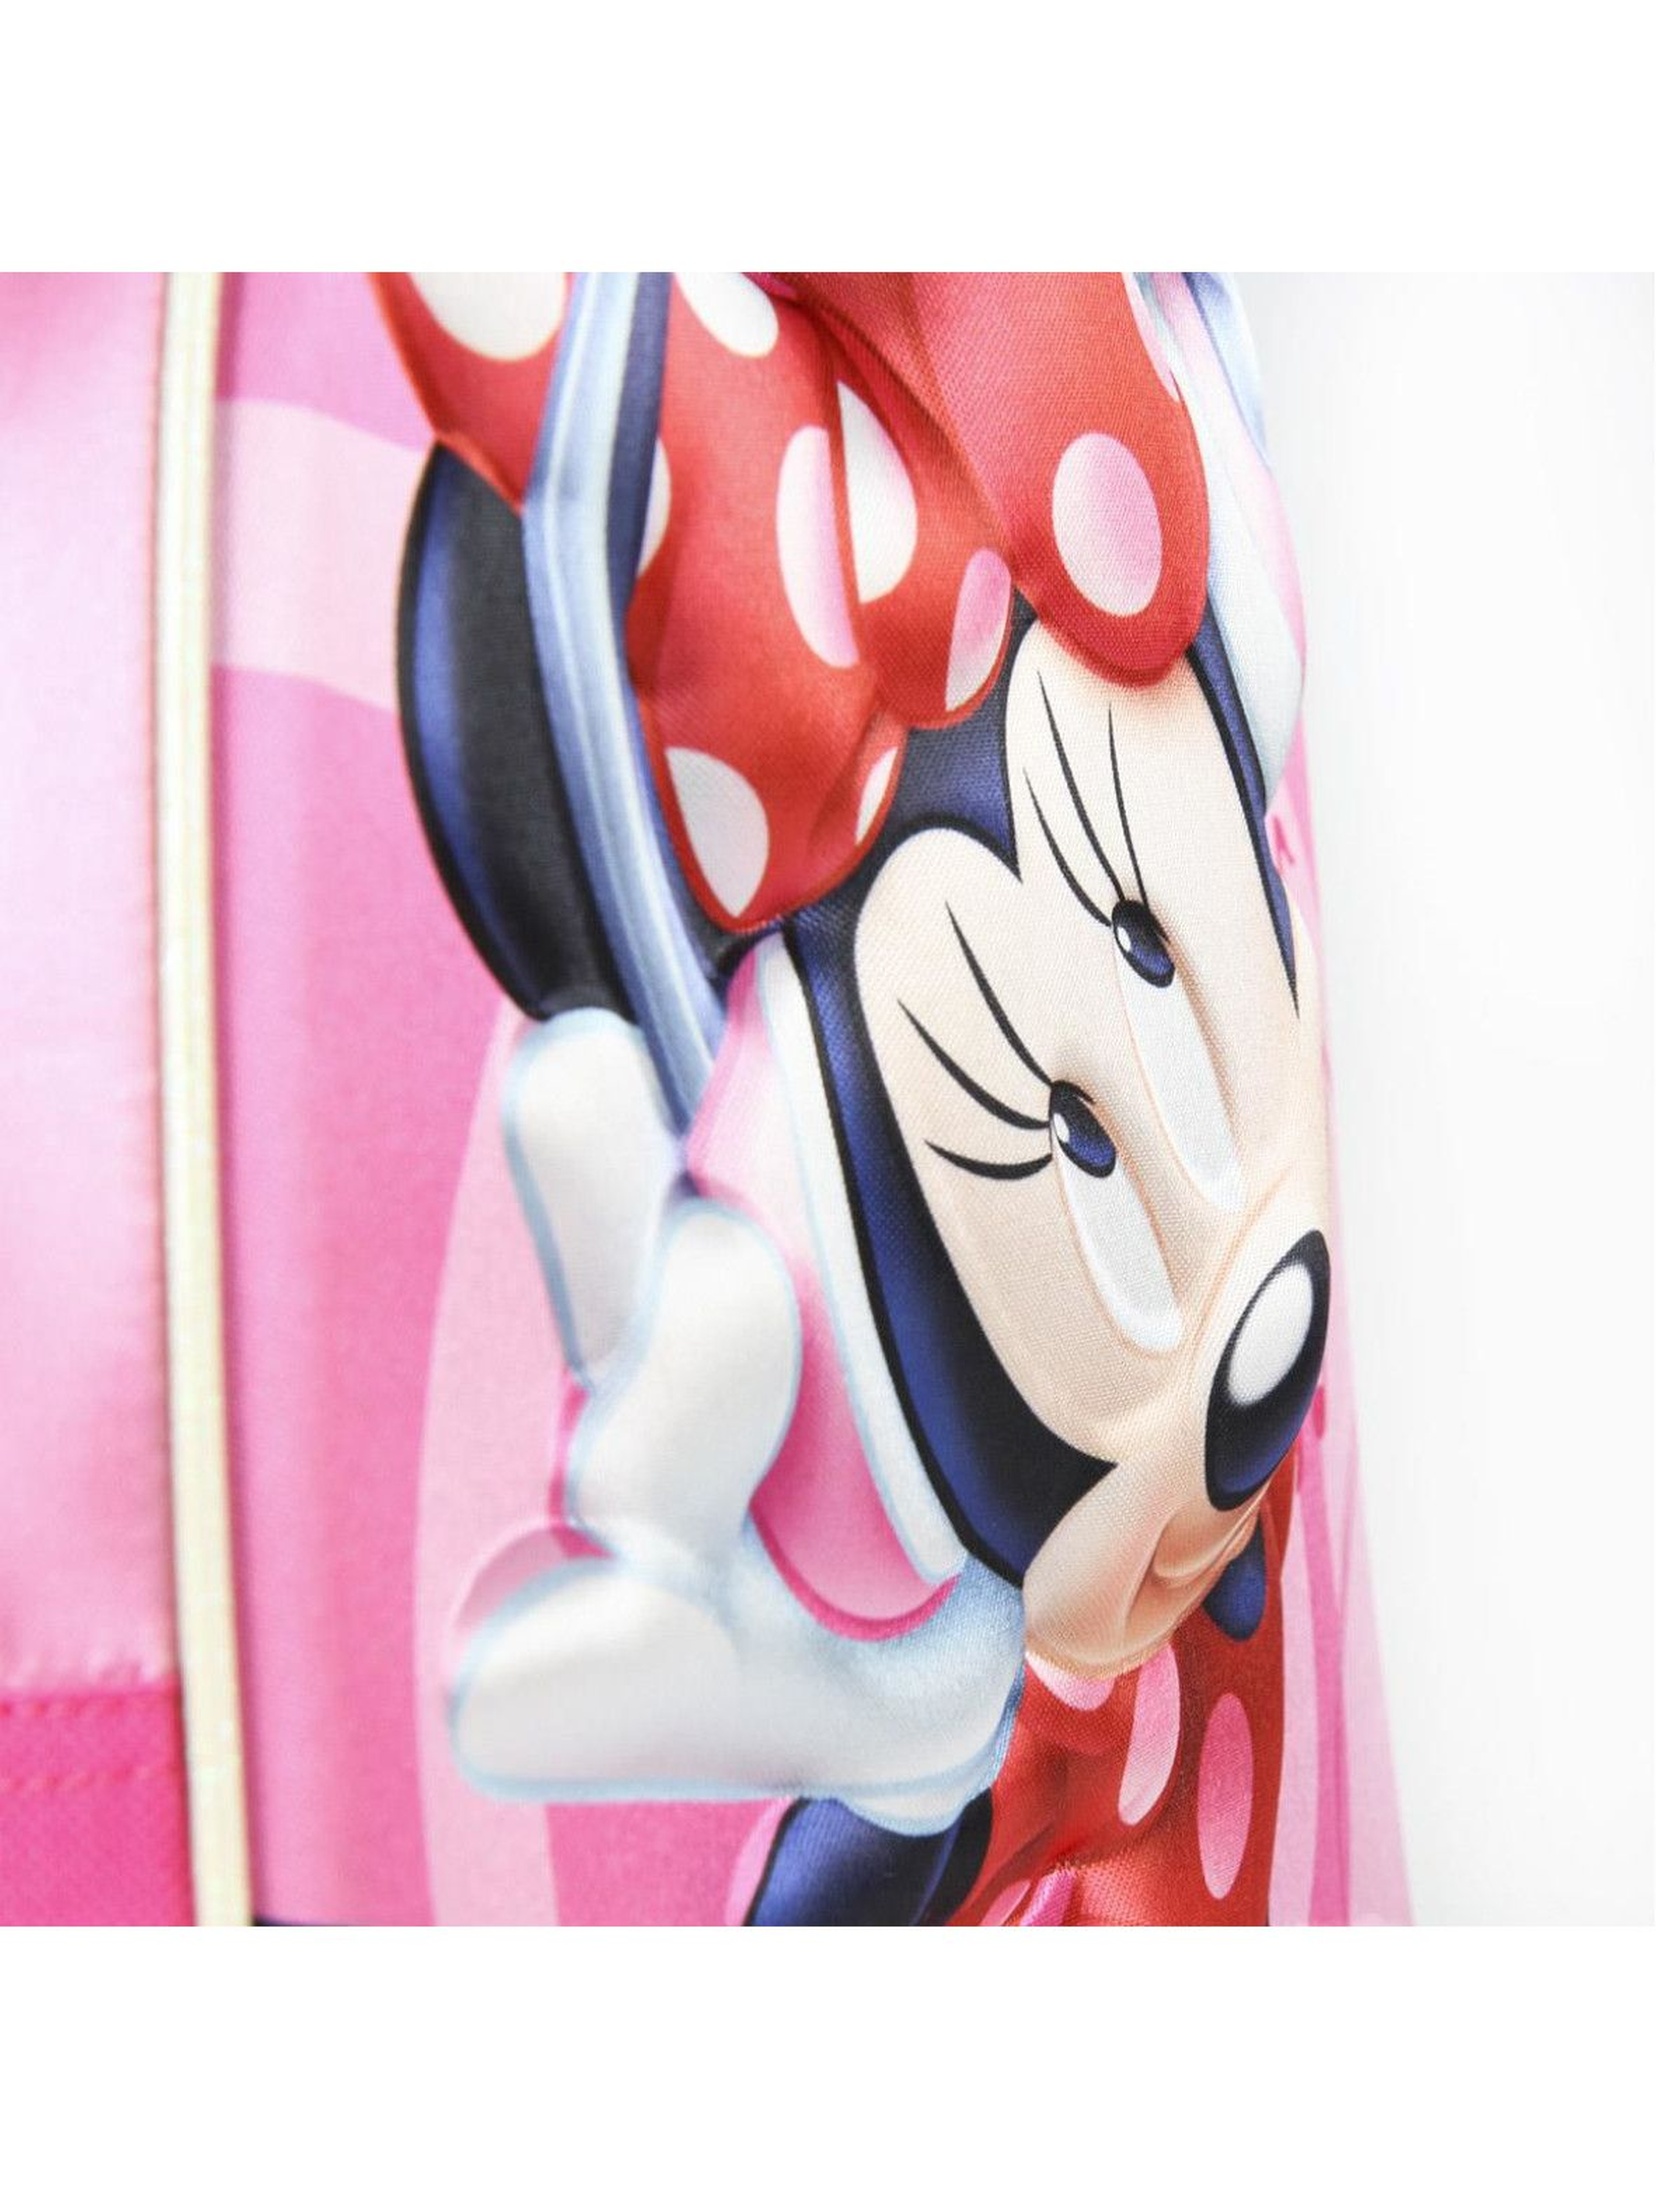 Plecak 3D Myszka Minnie - różowy